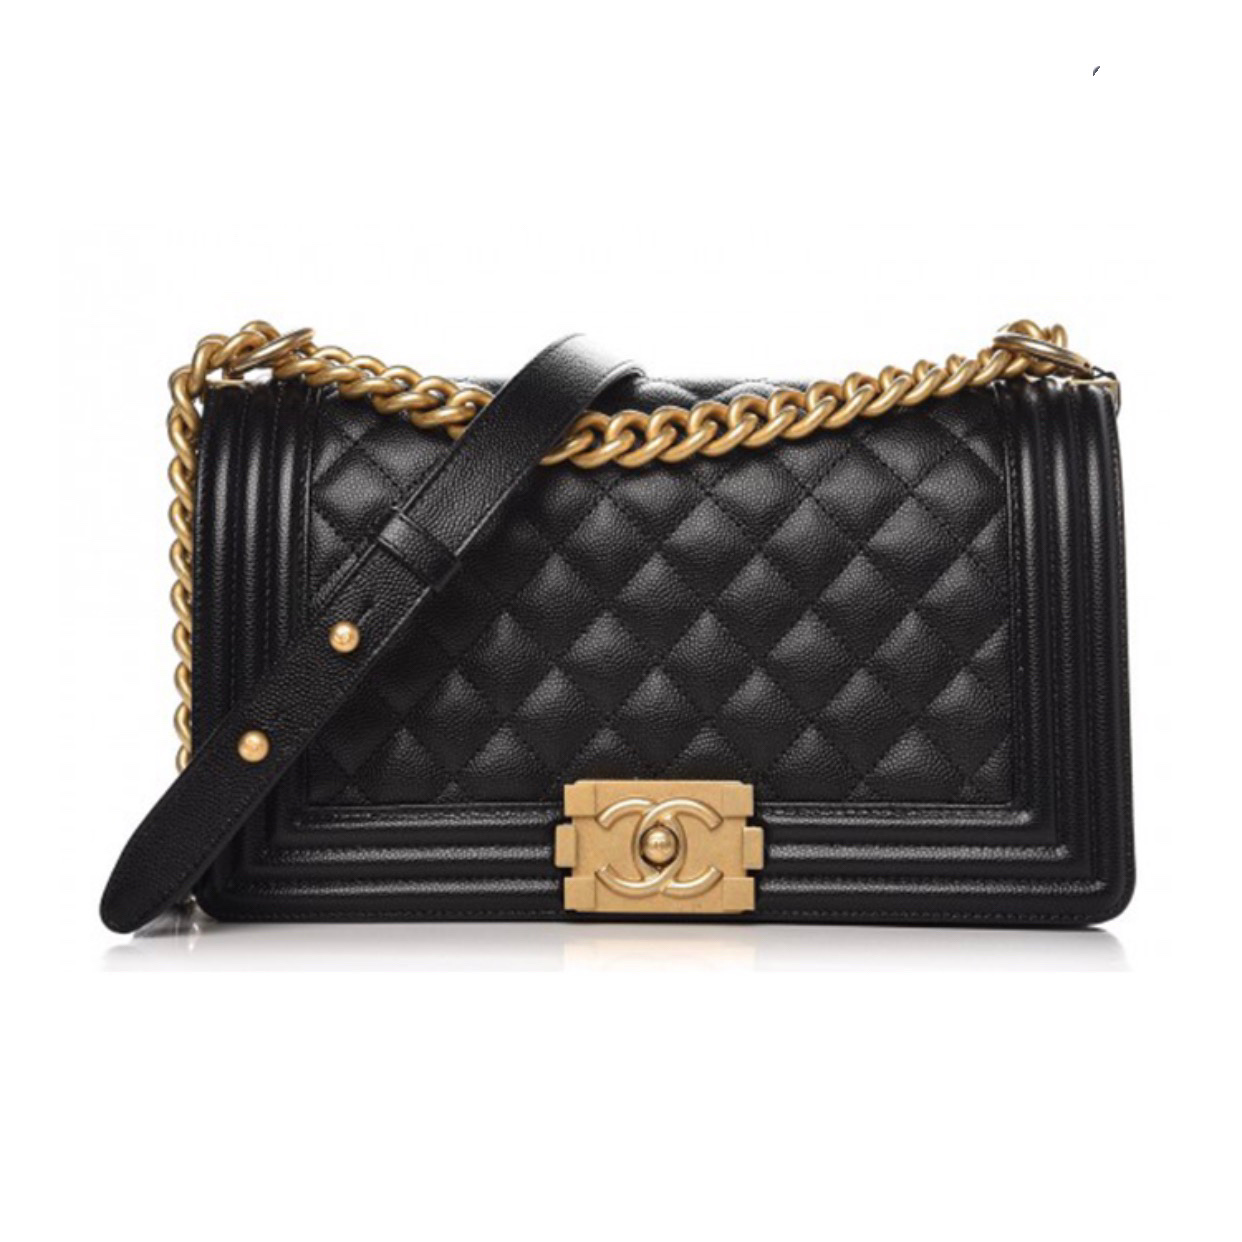 

CHANEL Original Design CC Bags High Quality Fashion Designer Luxury Handbags Purses Women Brand Classic Style Genuine Leather Shoulder Bag, With box